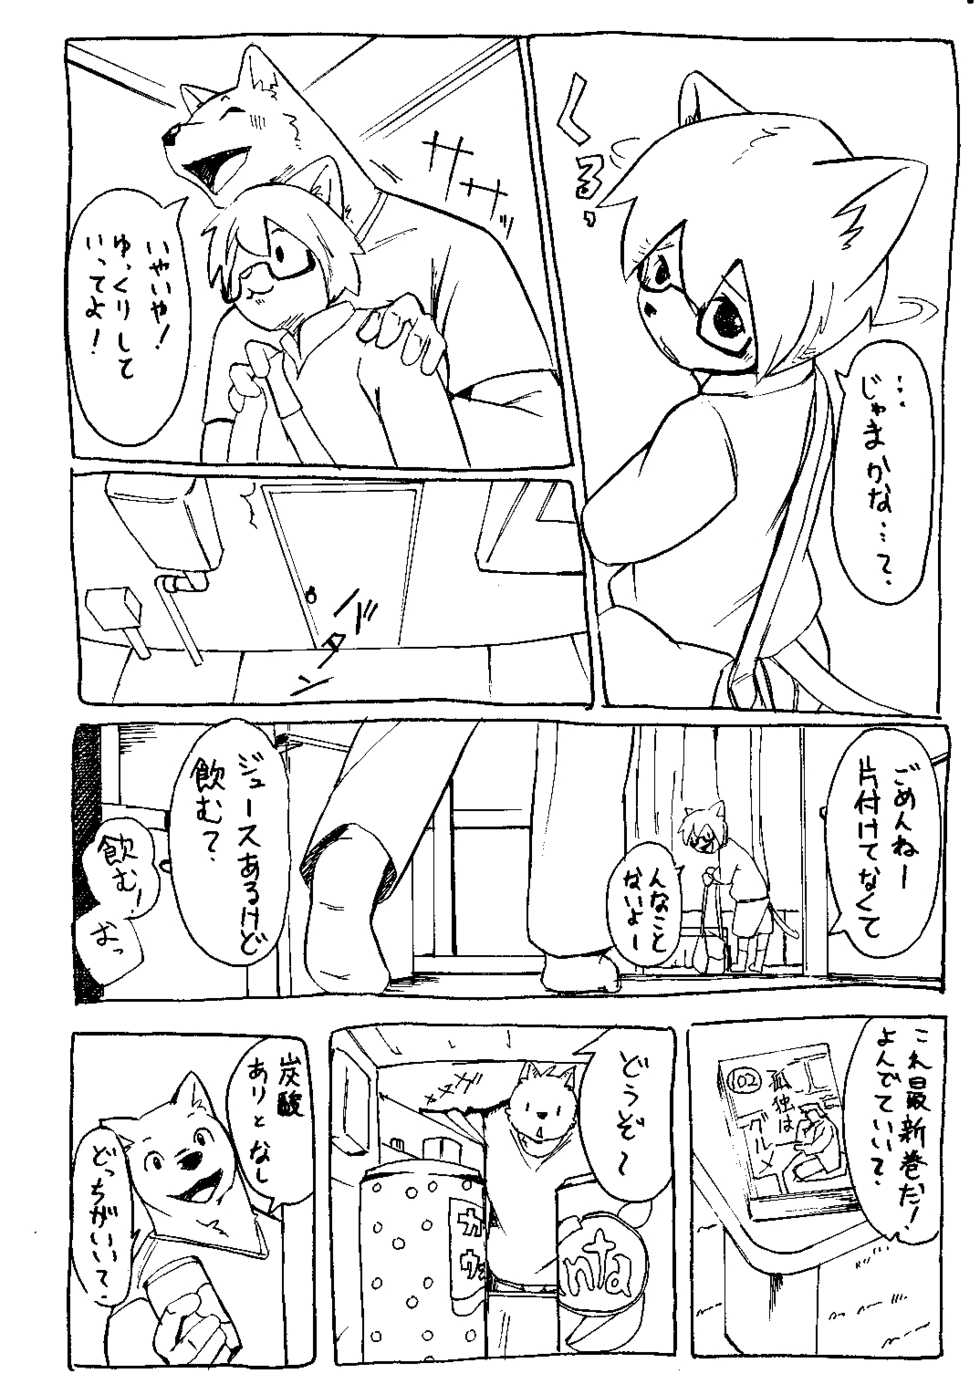 Marimo - ラクガキシリーズ - Page 3